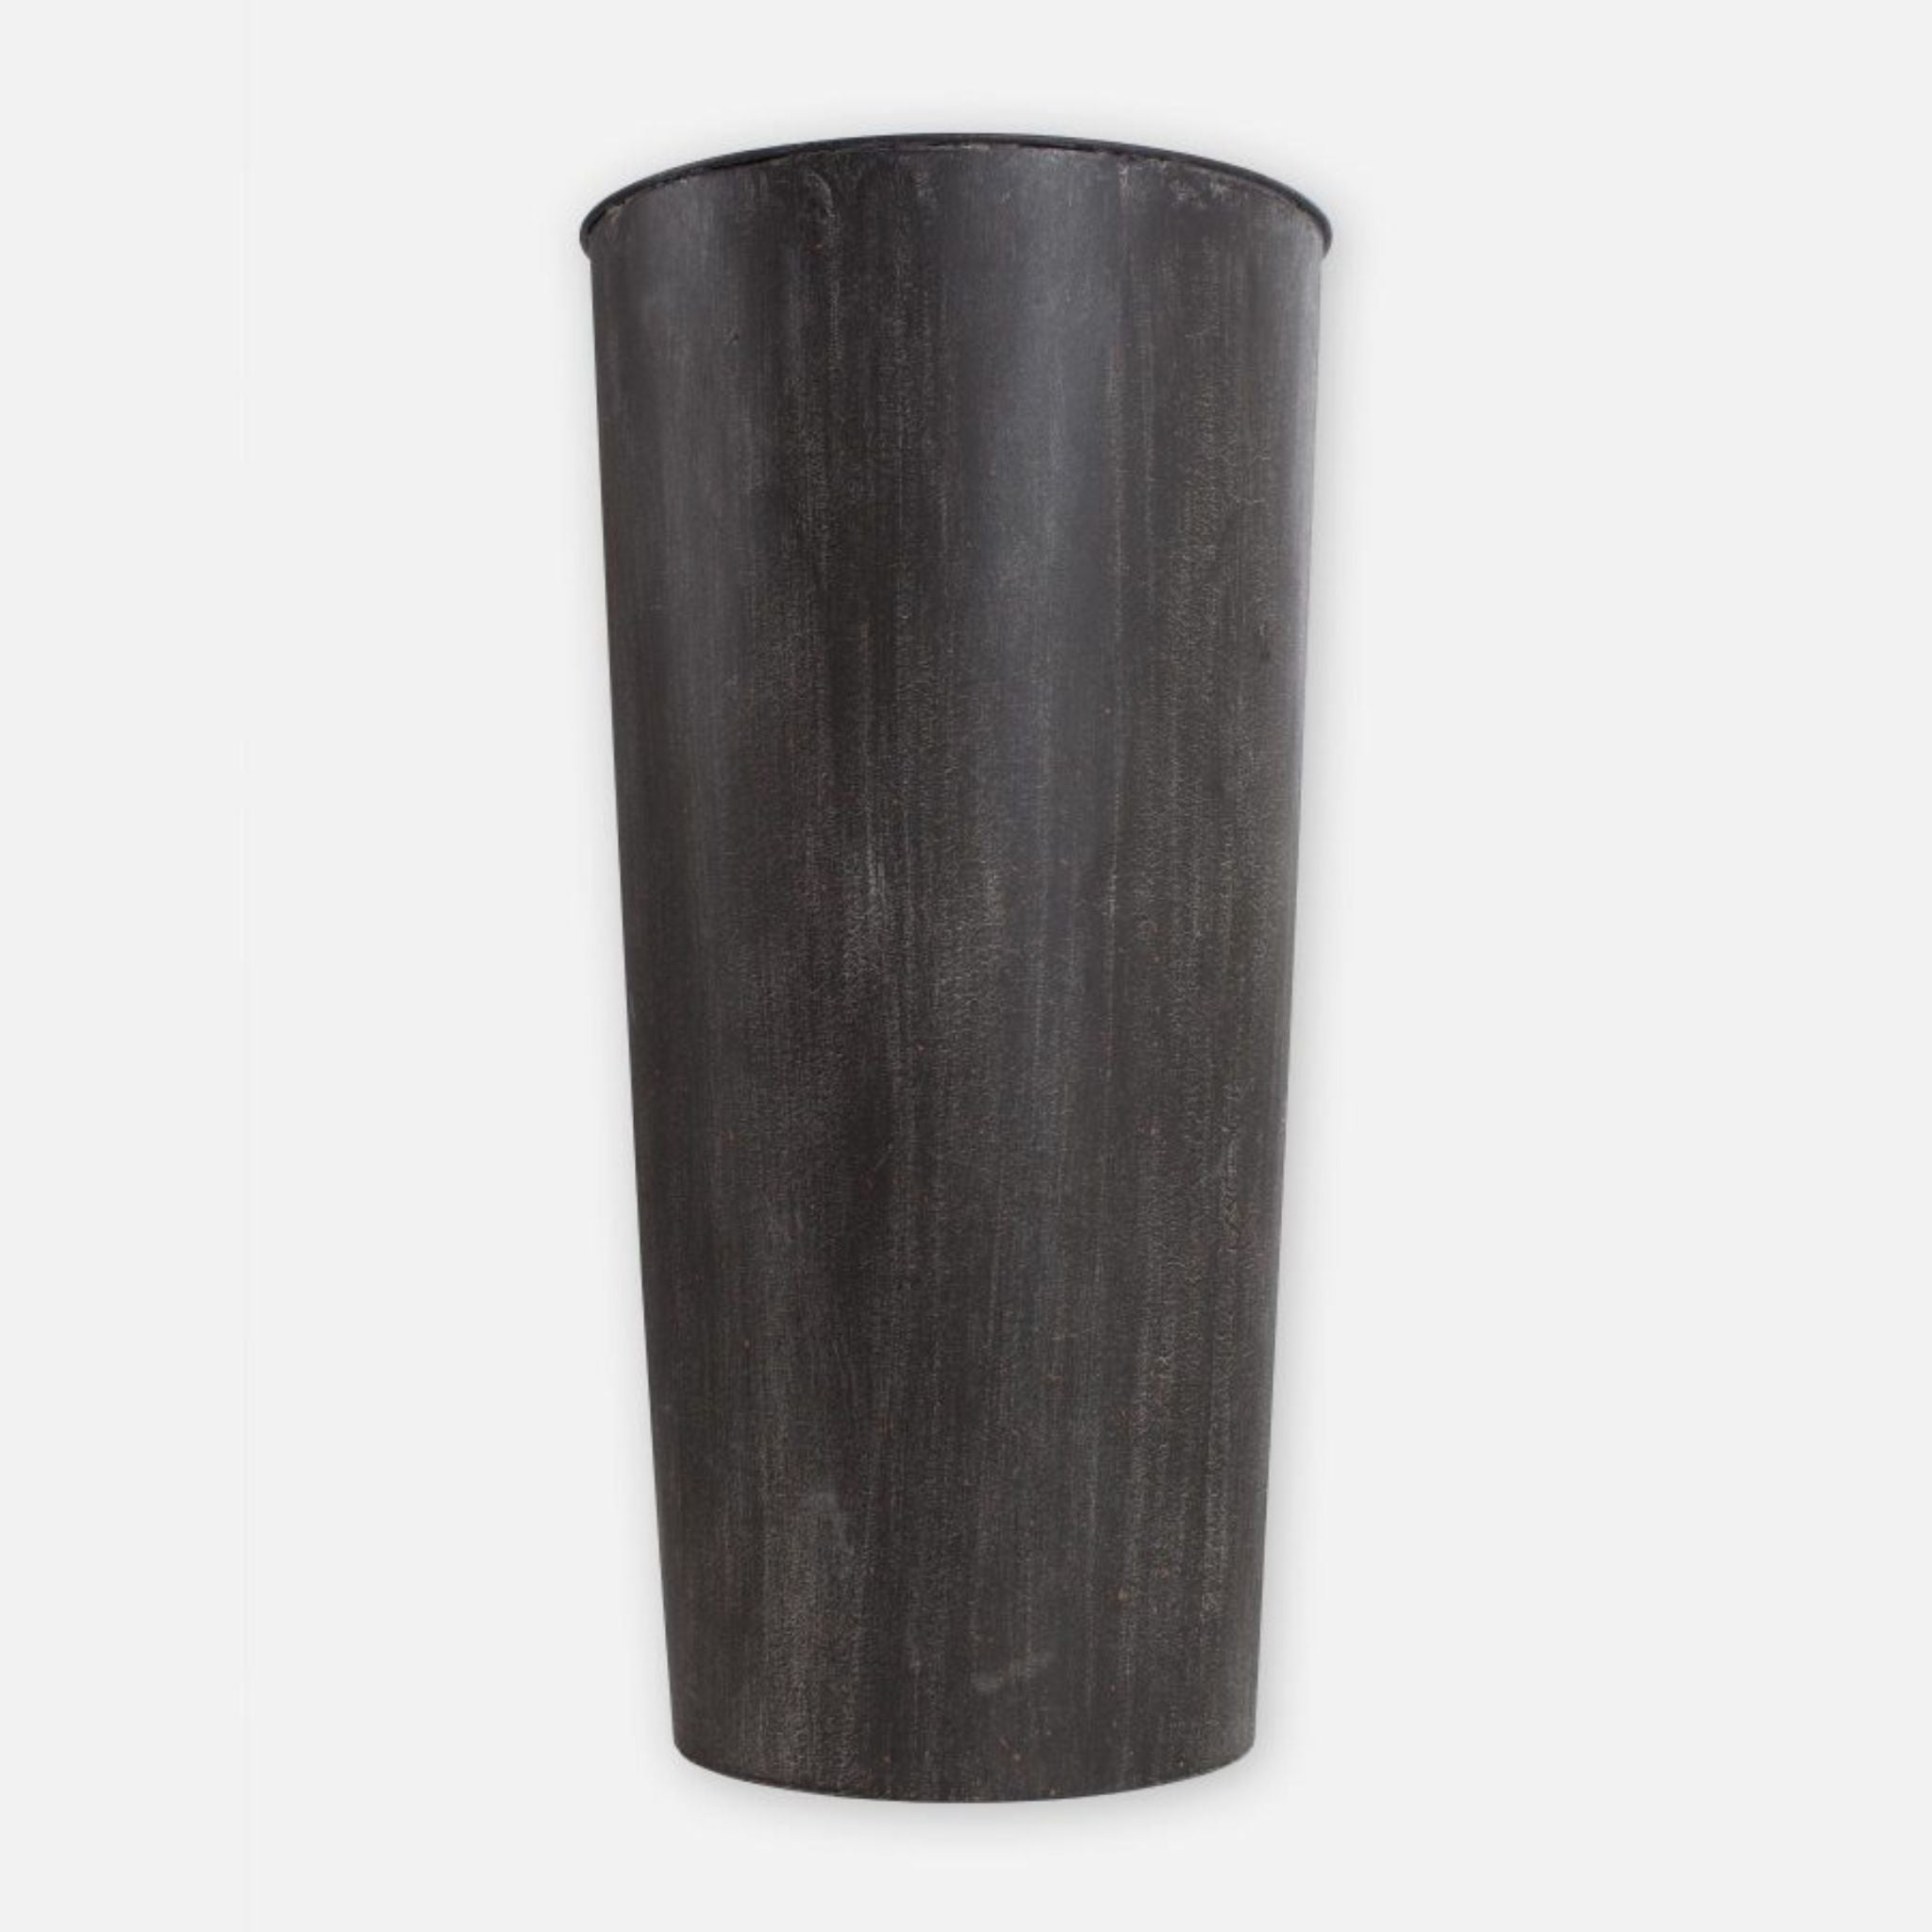 Tall floor vase - dark metal - 0